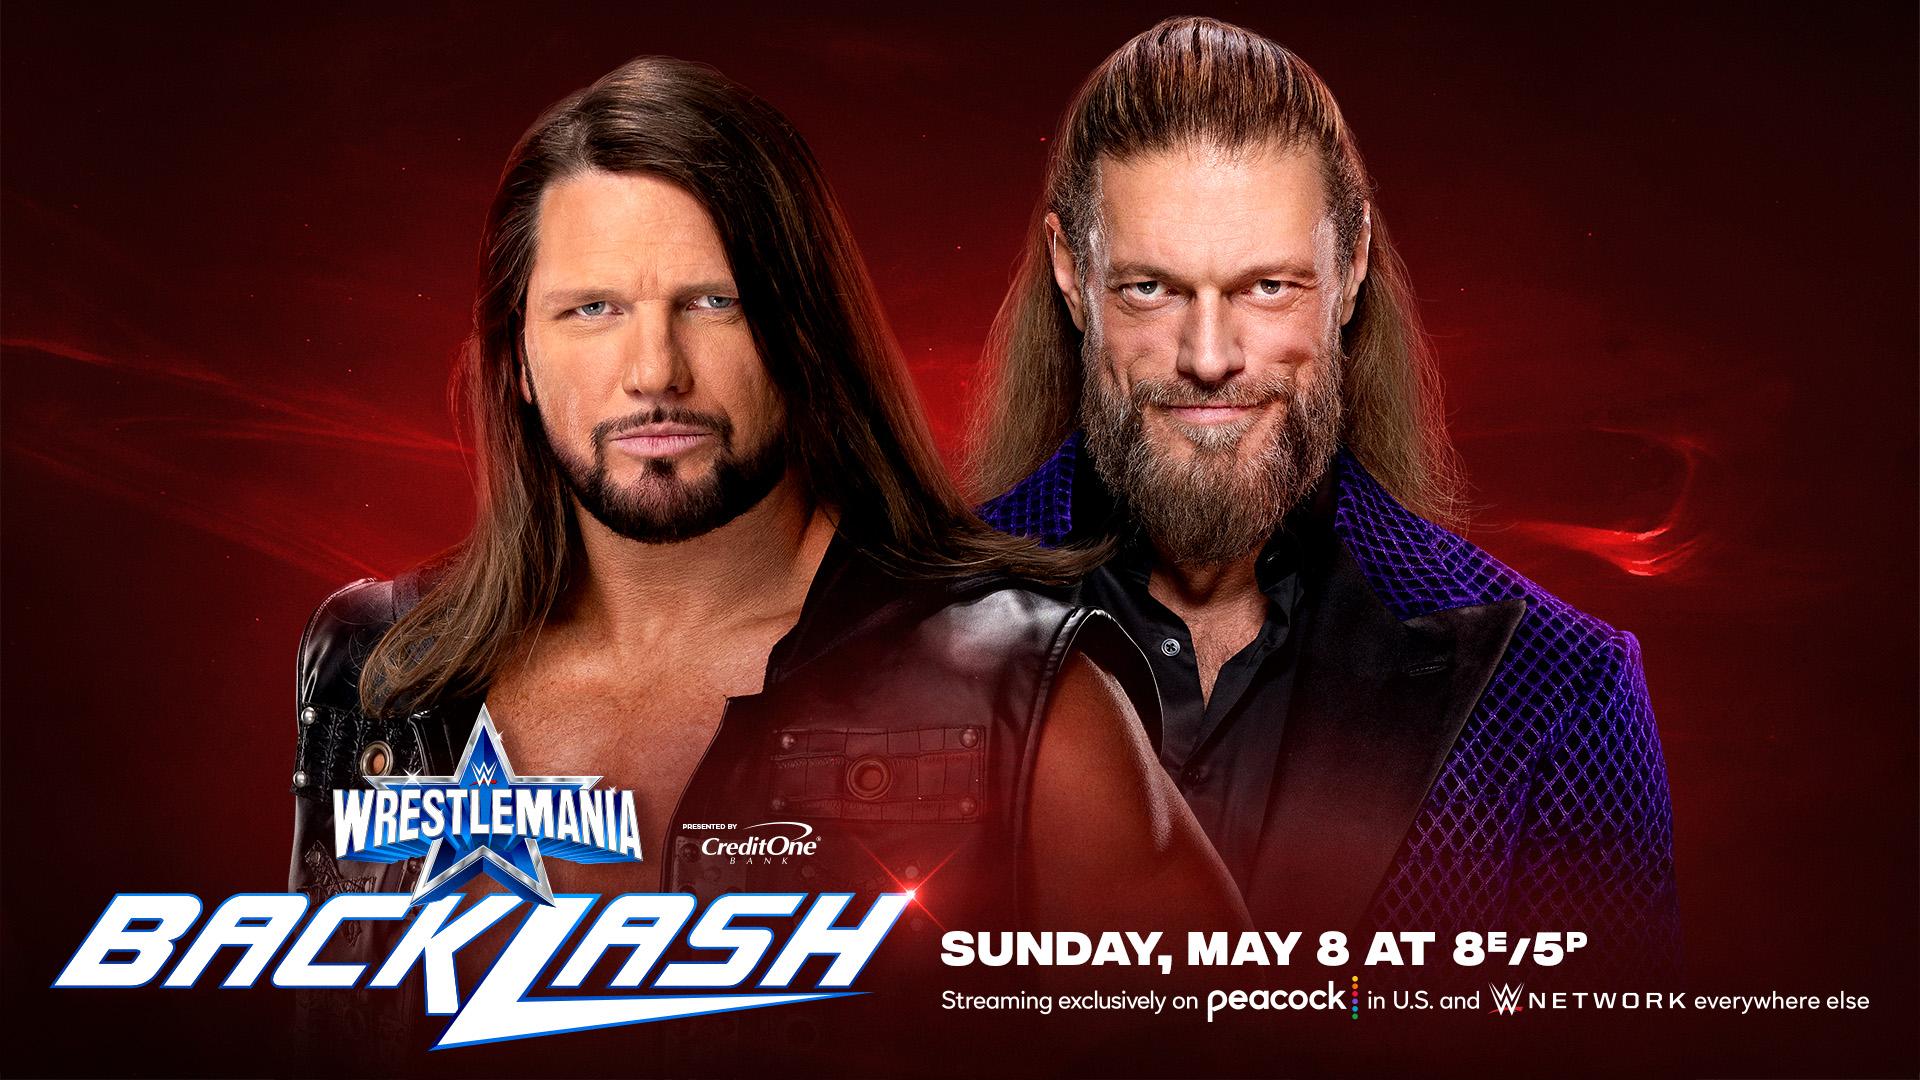 Edge vs AJ Styles II Announced for WWE WrestleMania Backlash 2022